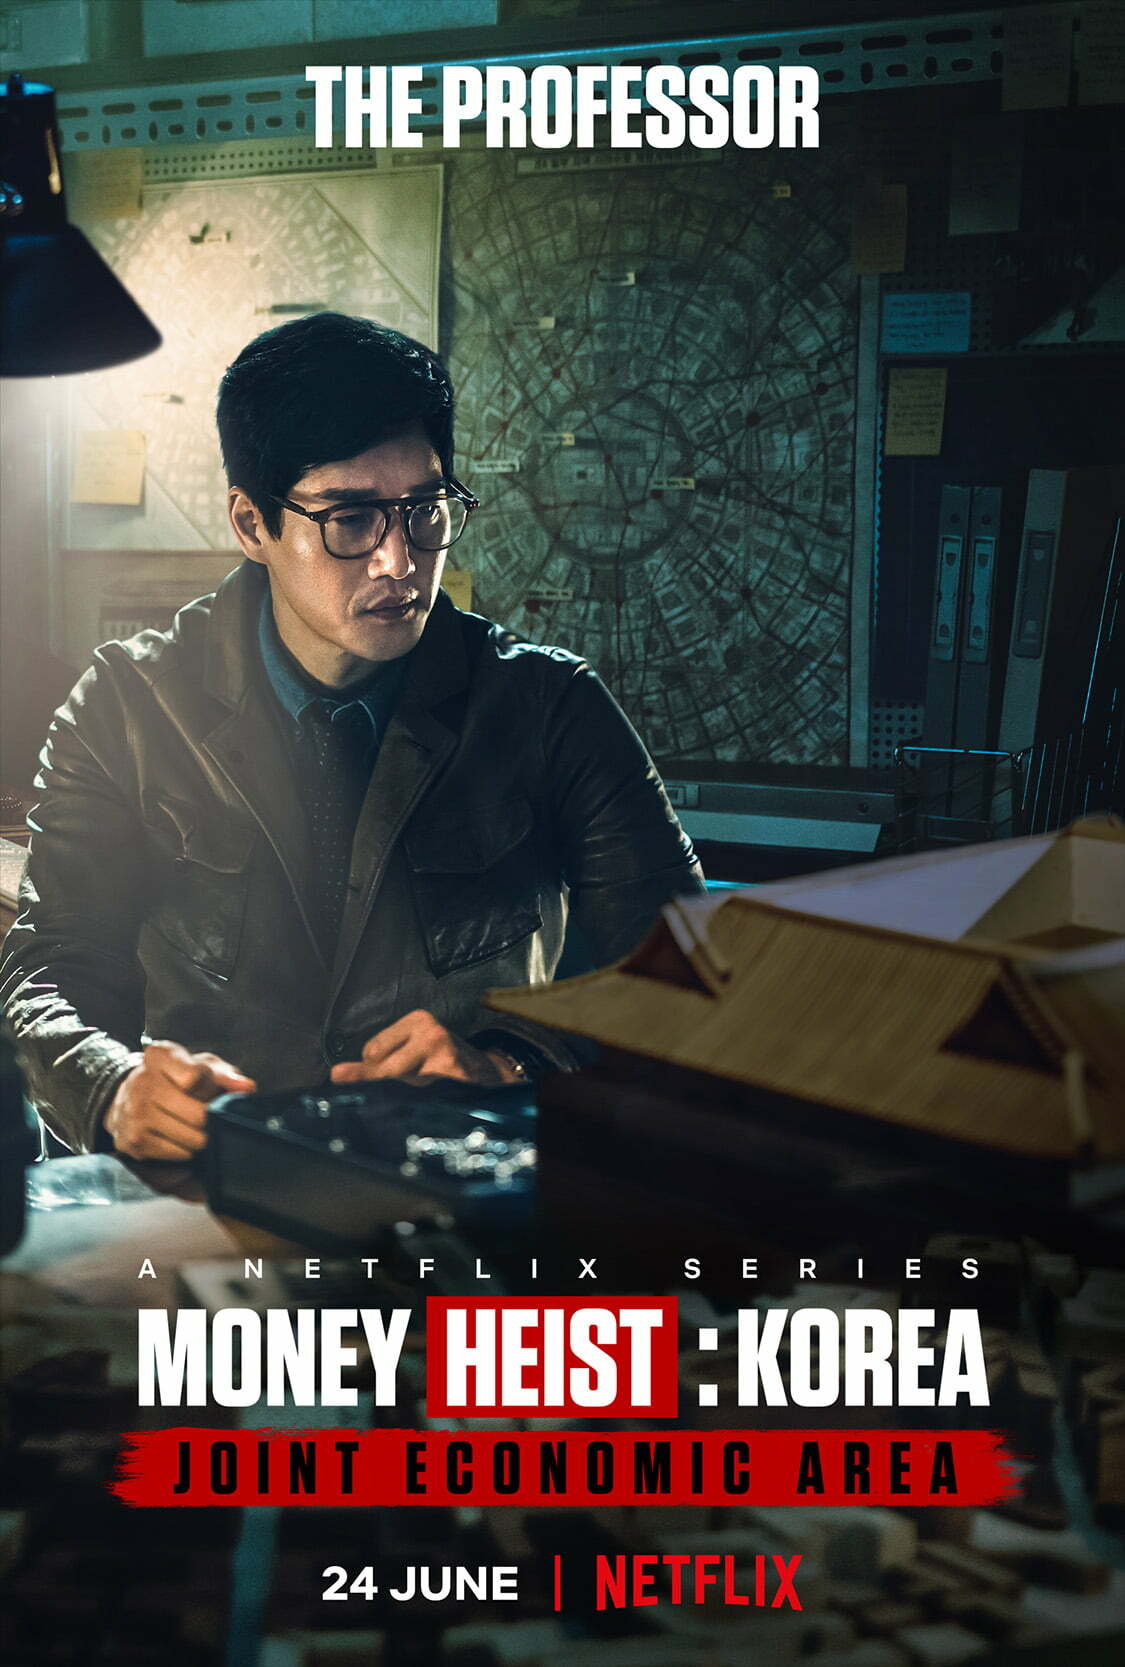 Money Heist: Korea - Joint Economic Area Part 1